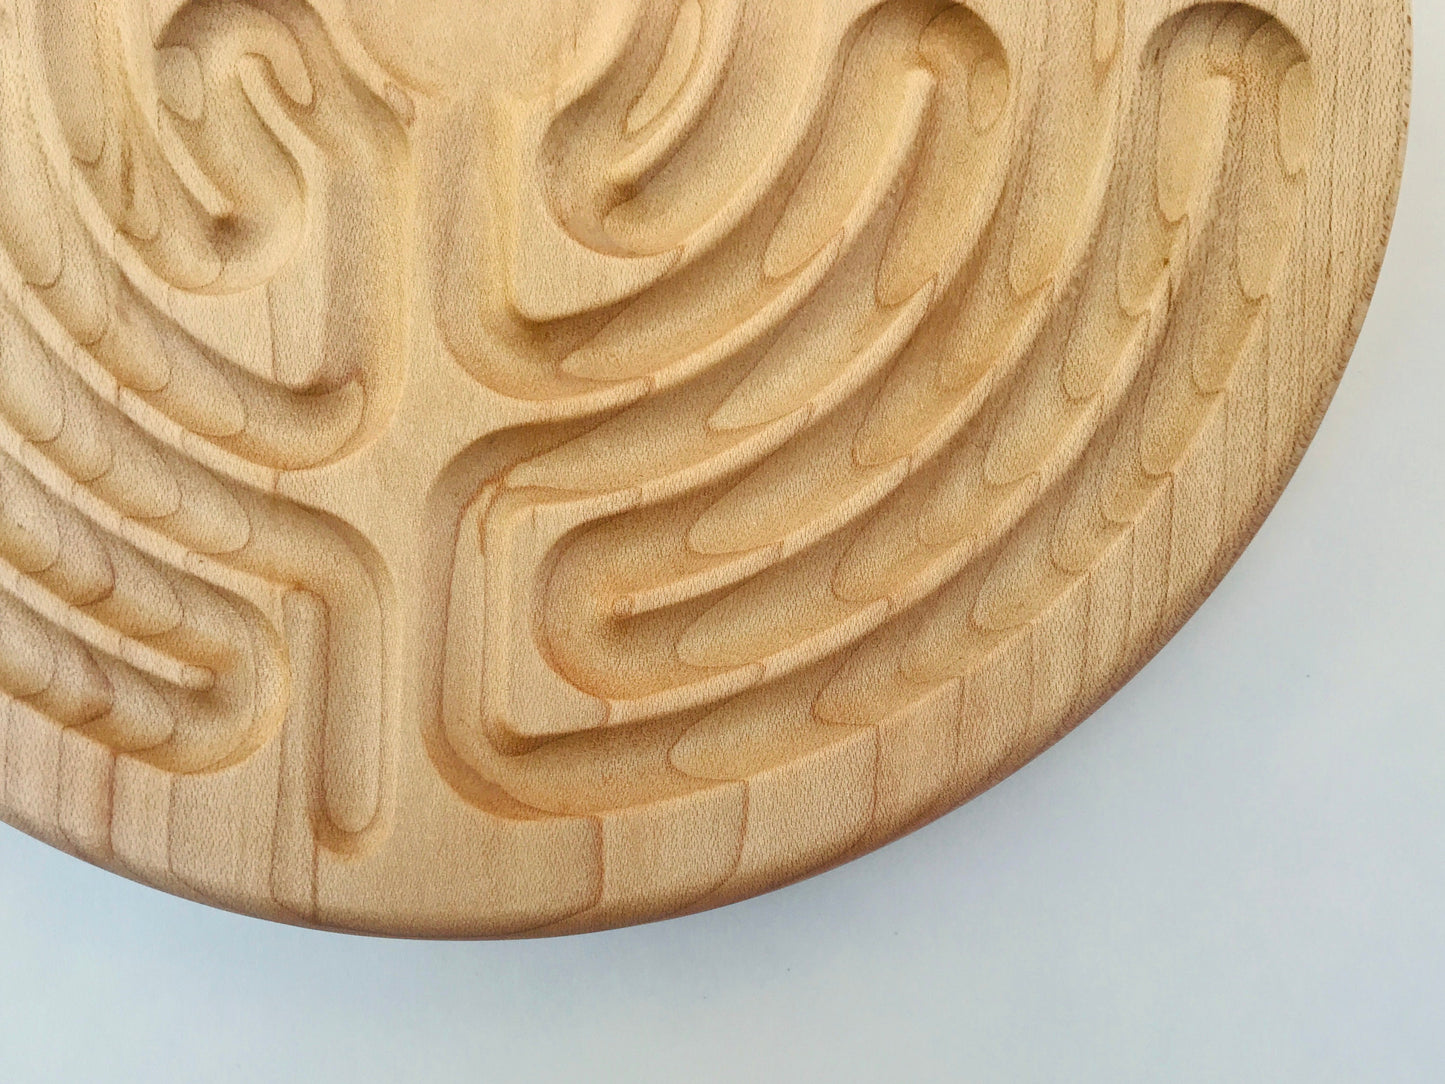 Medium Chartres-style Finger Labyrinth, Maple/Walnut Wood, 7.5" diameter